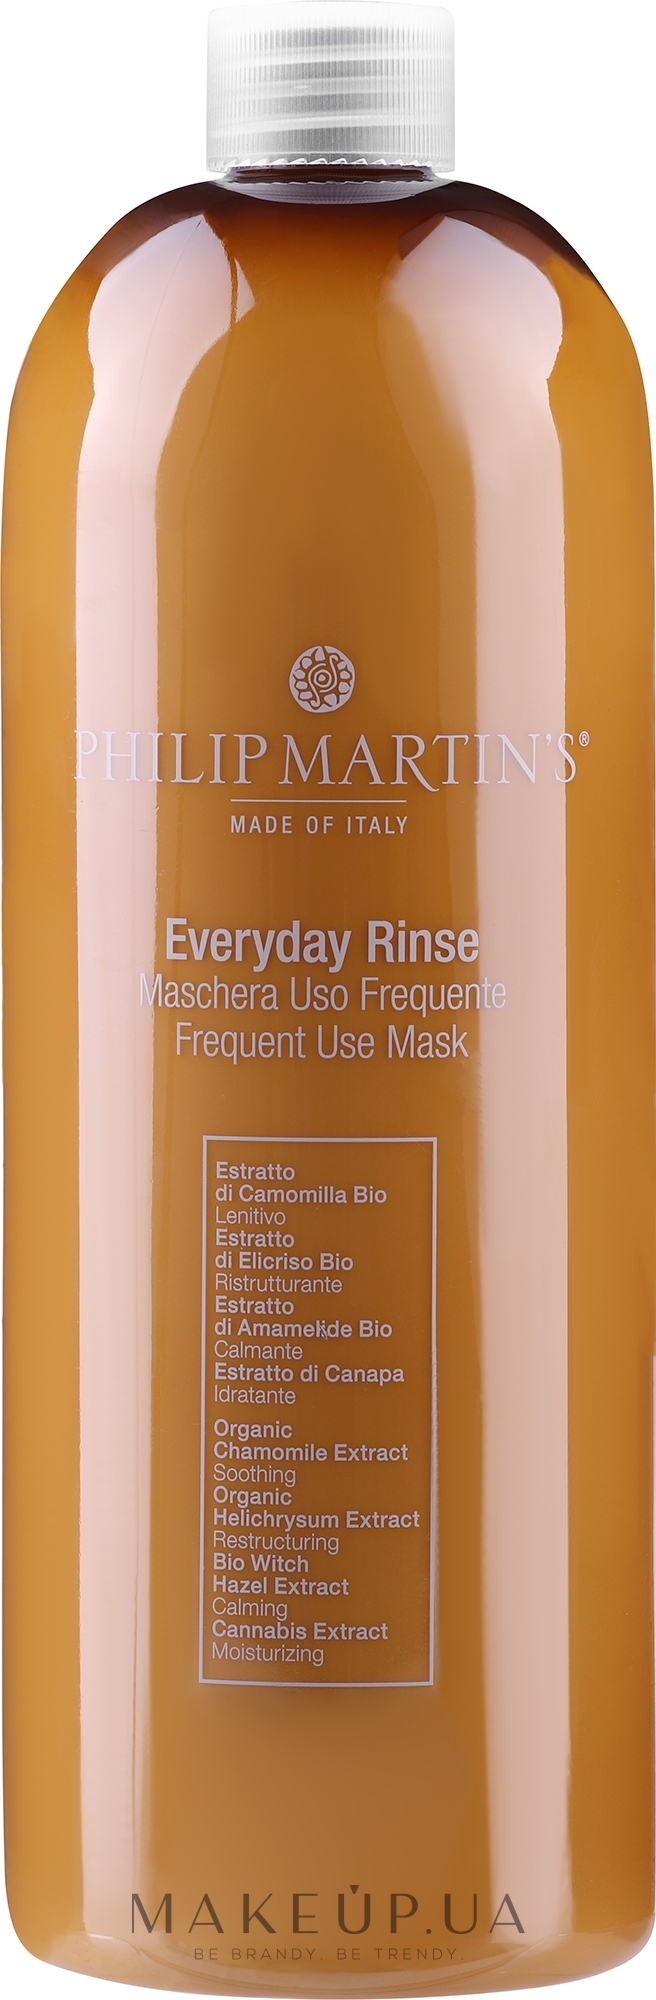 Маска для частого використання - Philip Martin`s Everyday Rinse Frequent Use Mask — фото 1000ml